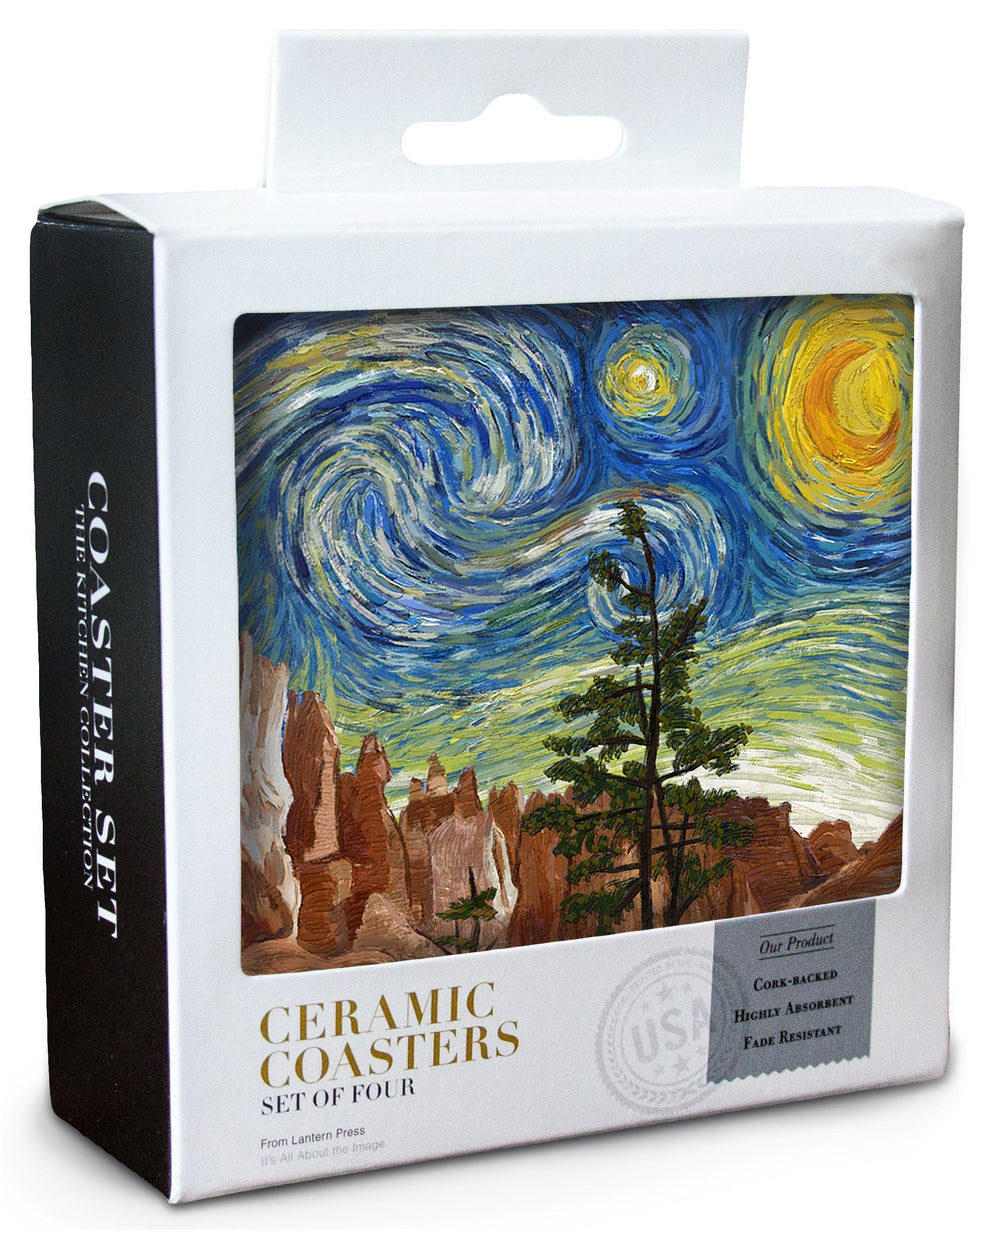 Bryce Canyon National Park, Starry Night National Park Series, Lantern Press Artwork, Coaster Set Coasters Lantern Press 